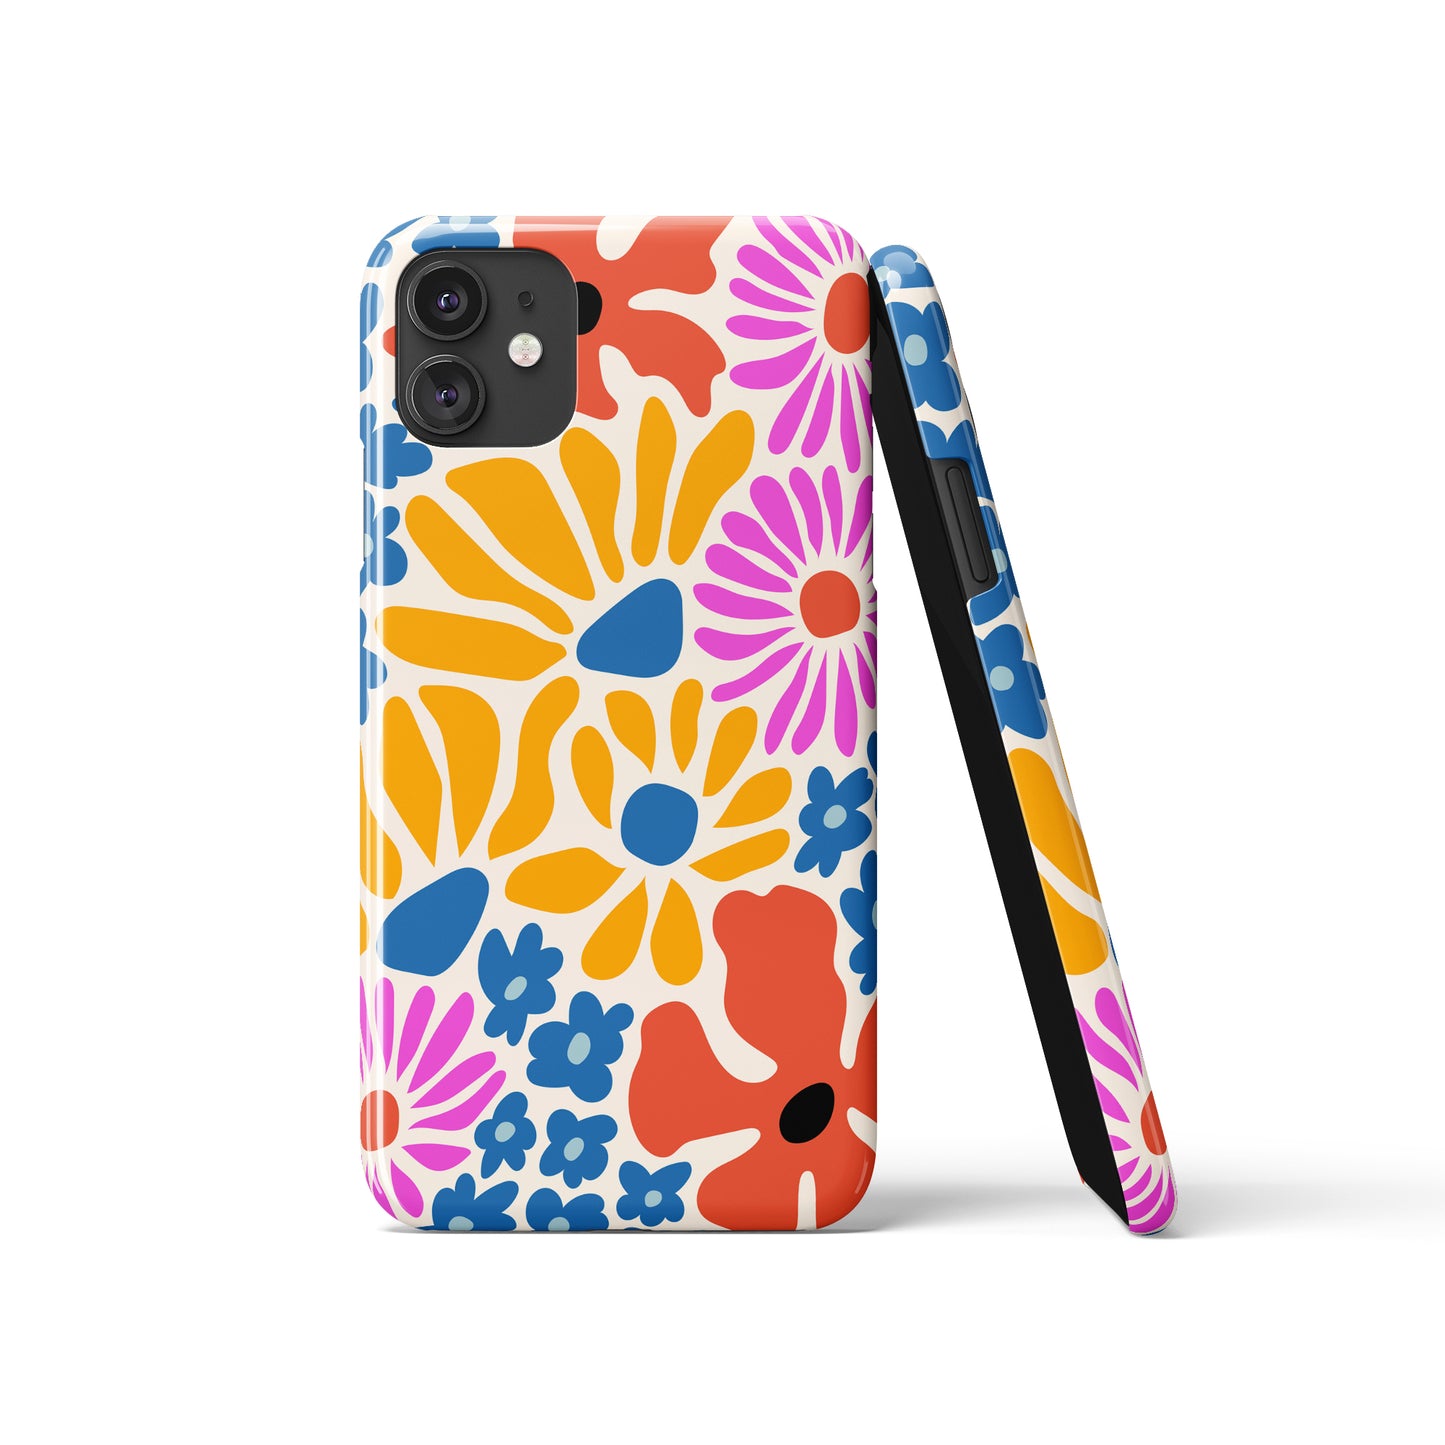 Colorful Retro Floral Artistic iPhone Case